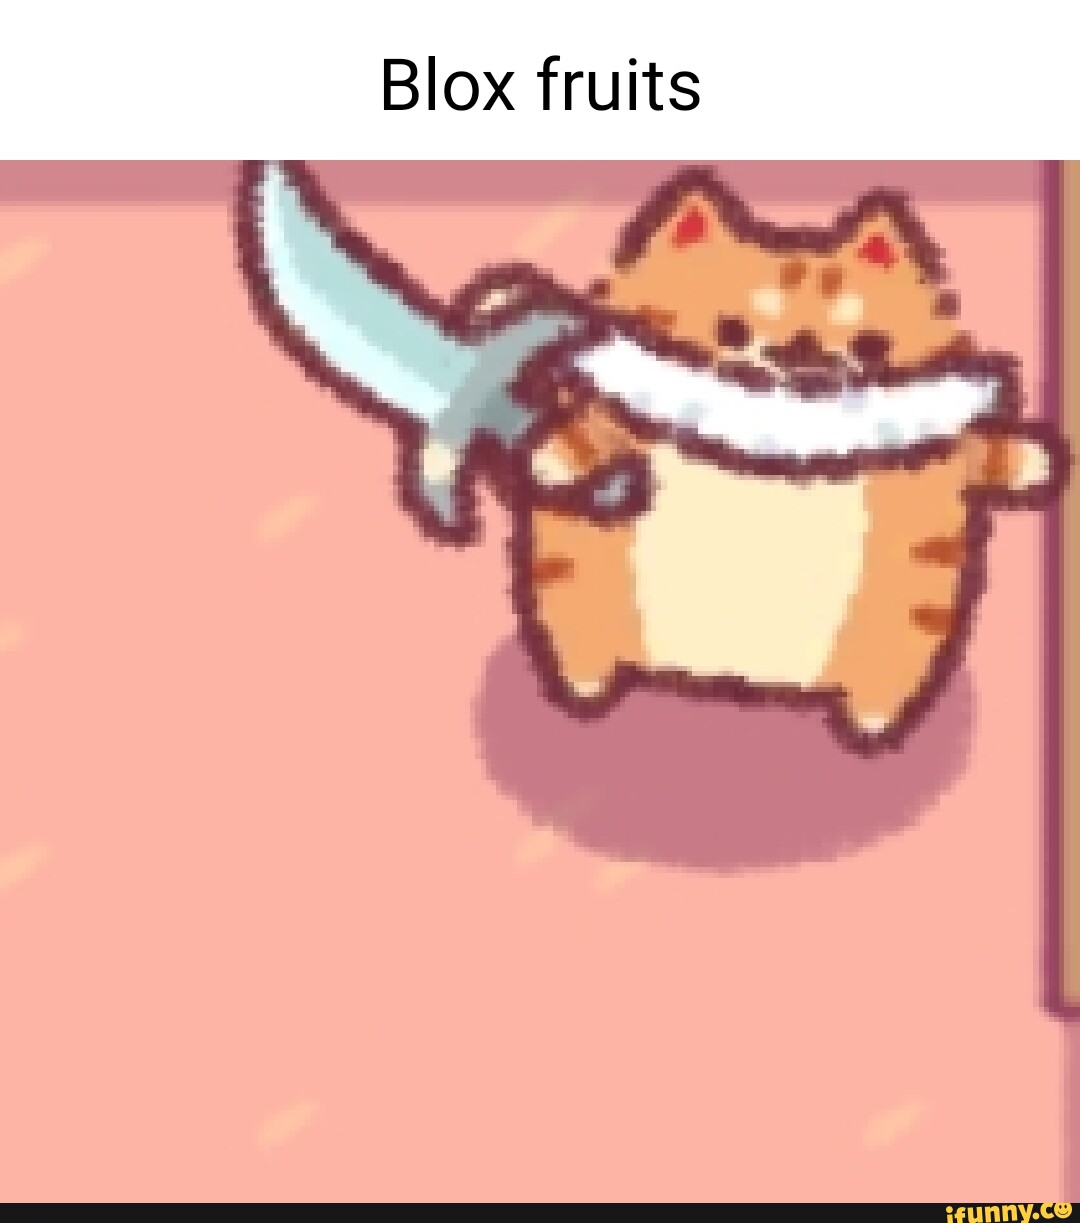 Blox fruits be like#animacao #roblox #bloxfruits #meme